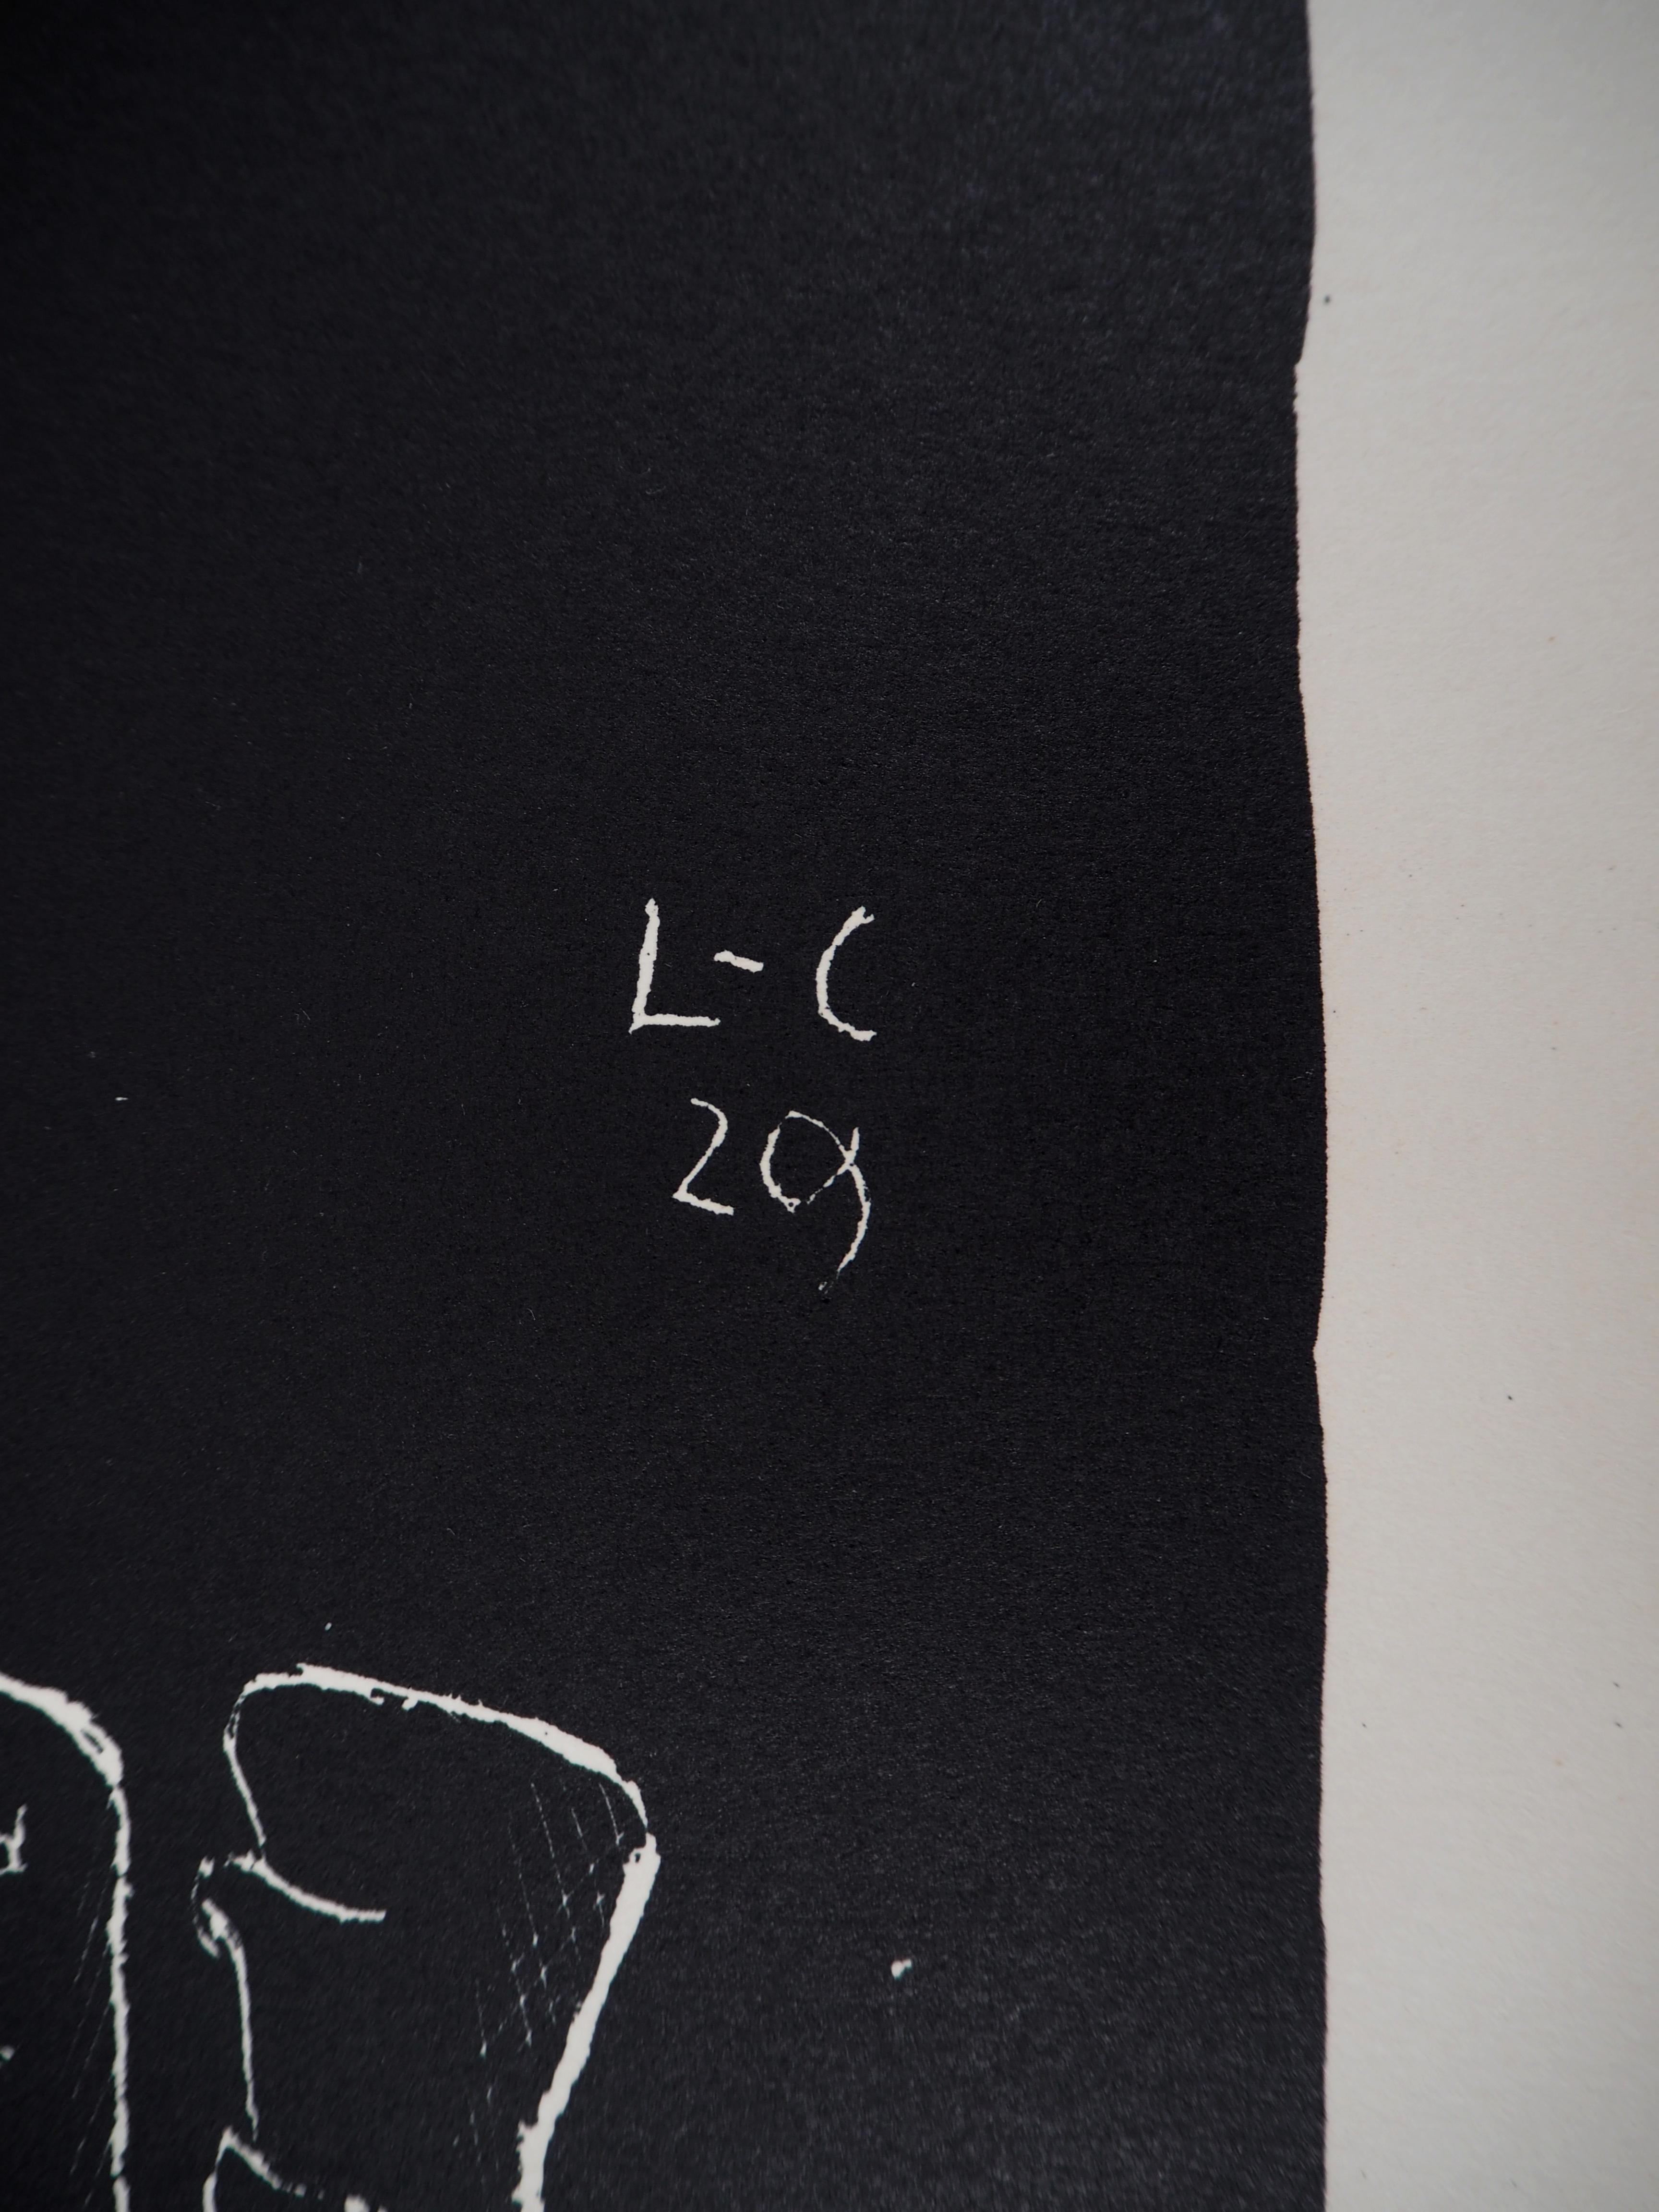 Still Life with Hand - Original lithograph (Atelier Michel Cassé), 1964 - Print by Le Corbusier